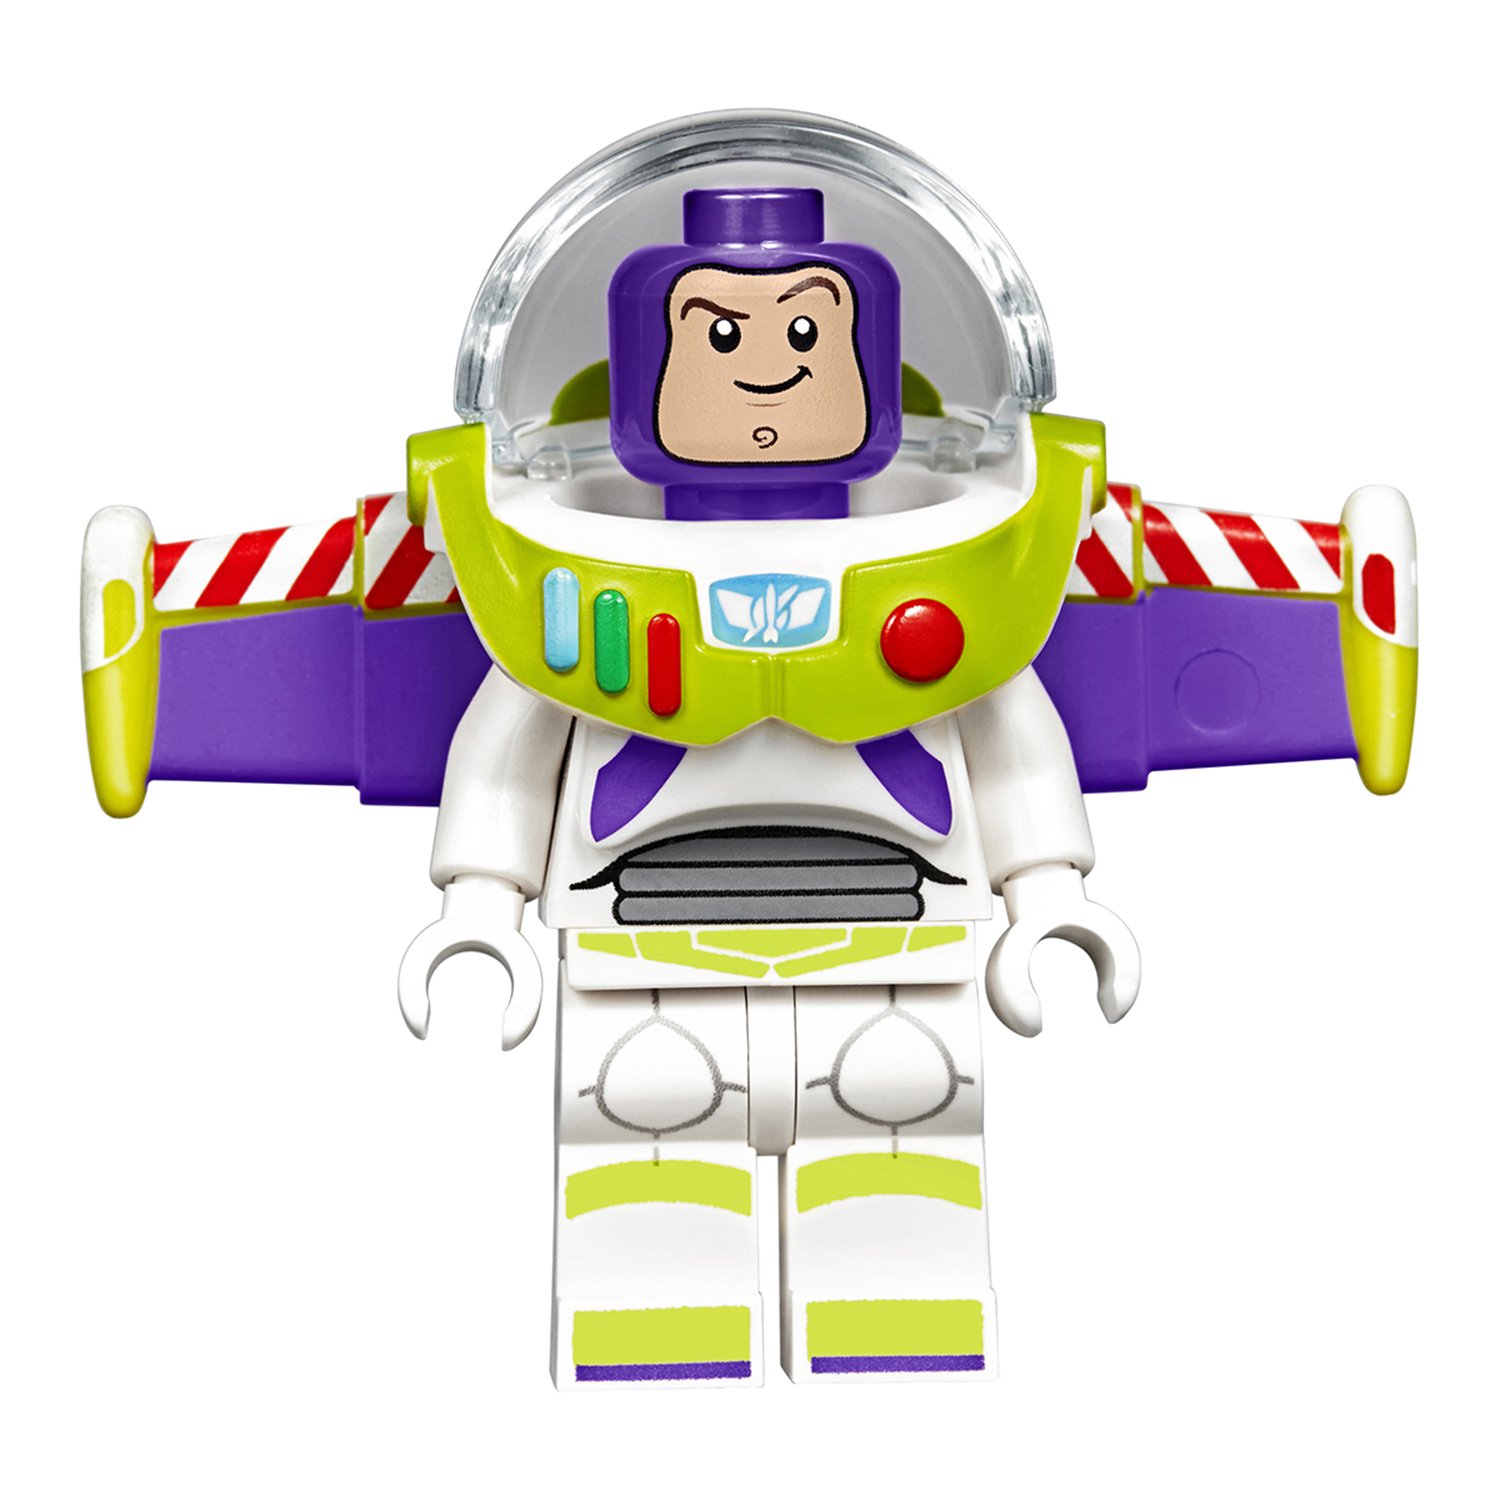 Конструктор Lego Toy Story - Приключения Базза и Бо Пип на детской площадке  